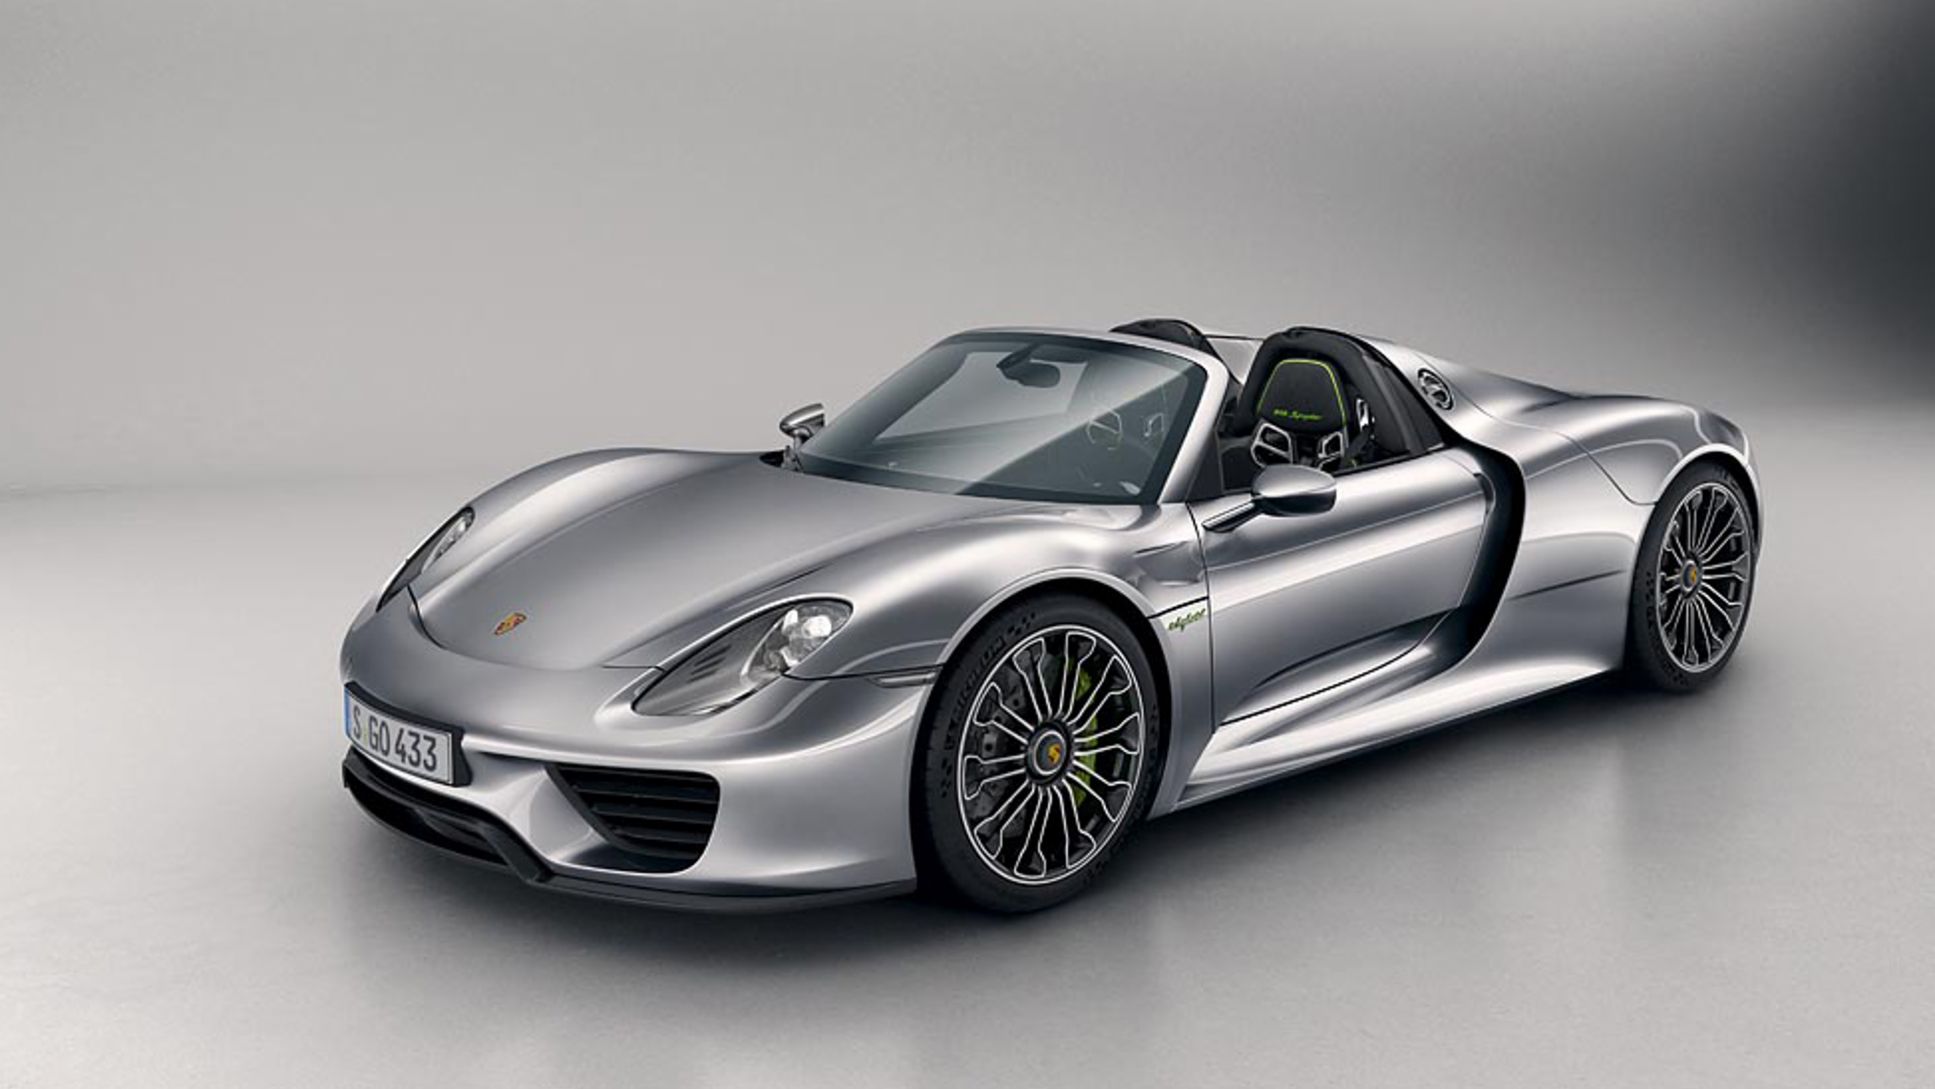 The super sportscar - Porsche Newsroom